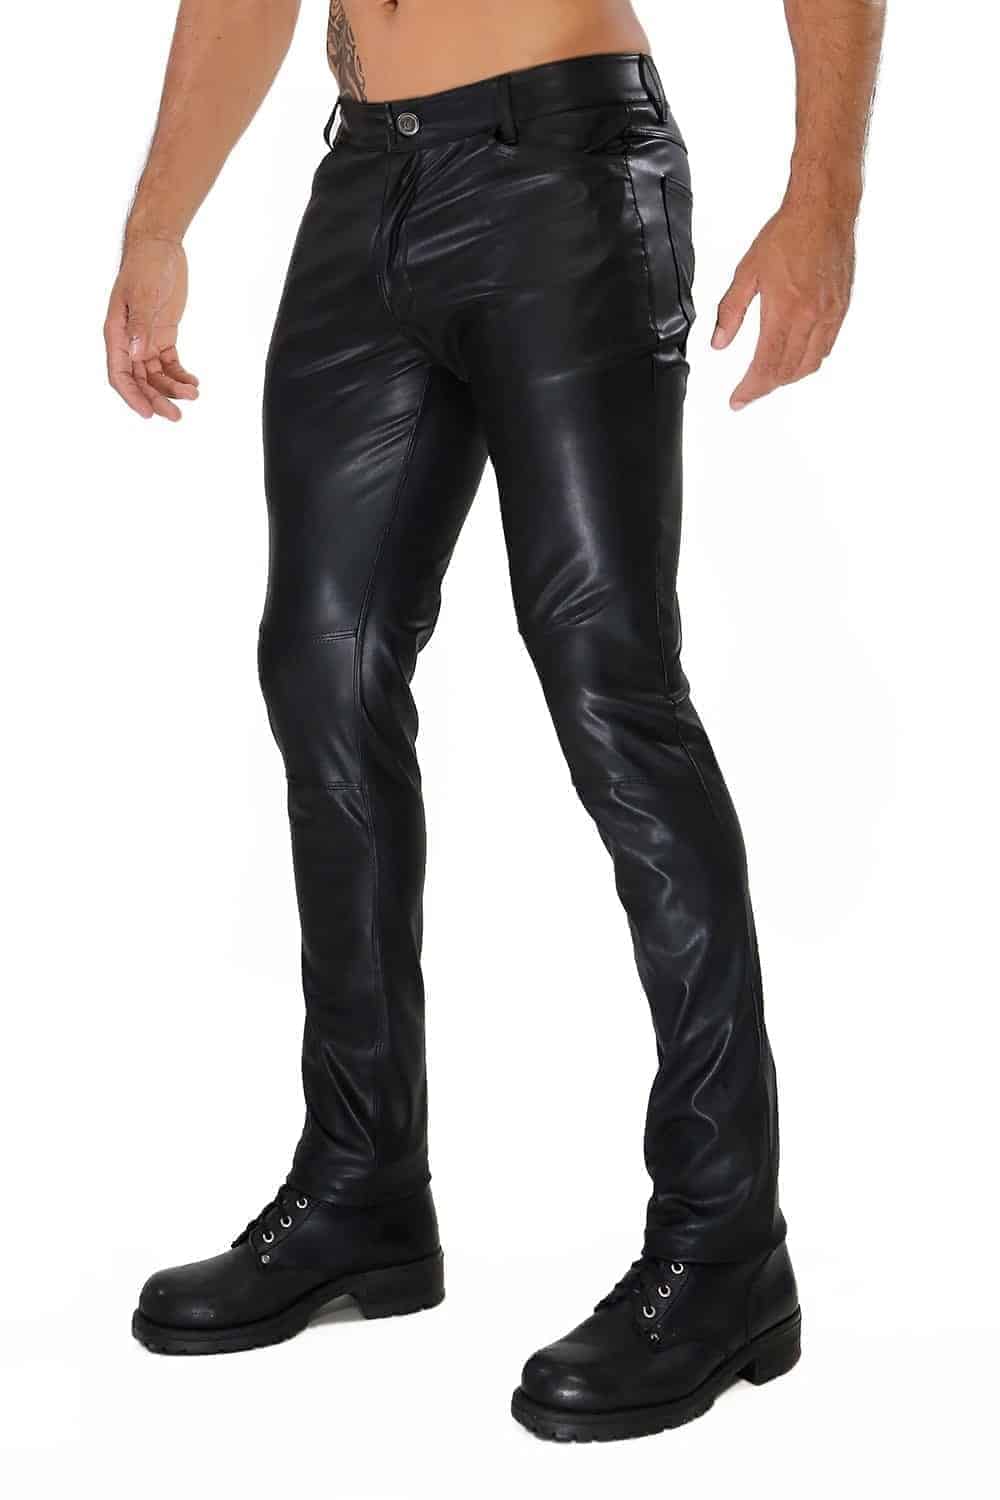 TOF Paris Fetish Full Zip Pants - Leatherette Design with Full Zipper